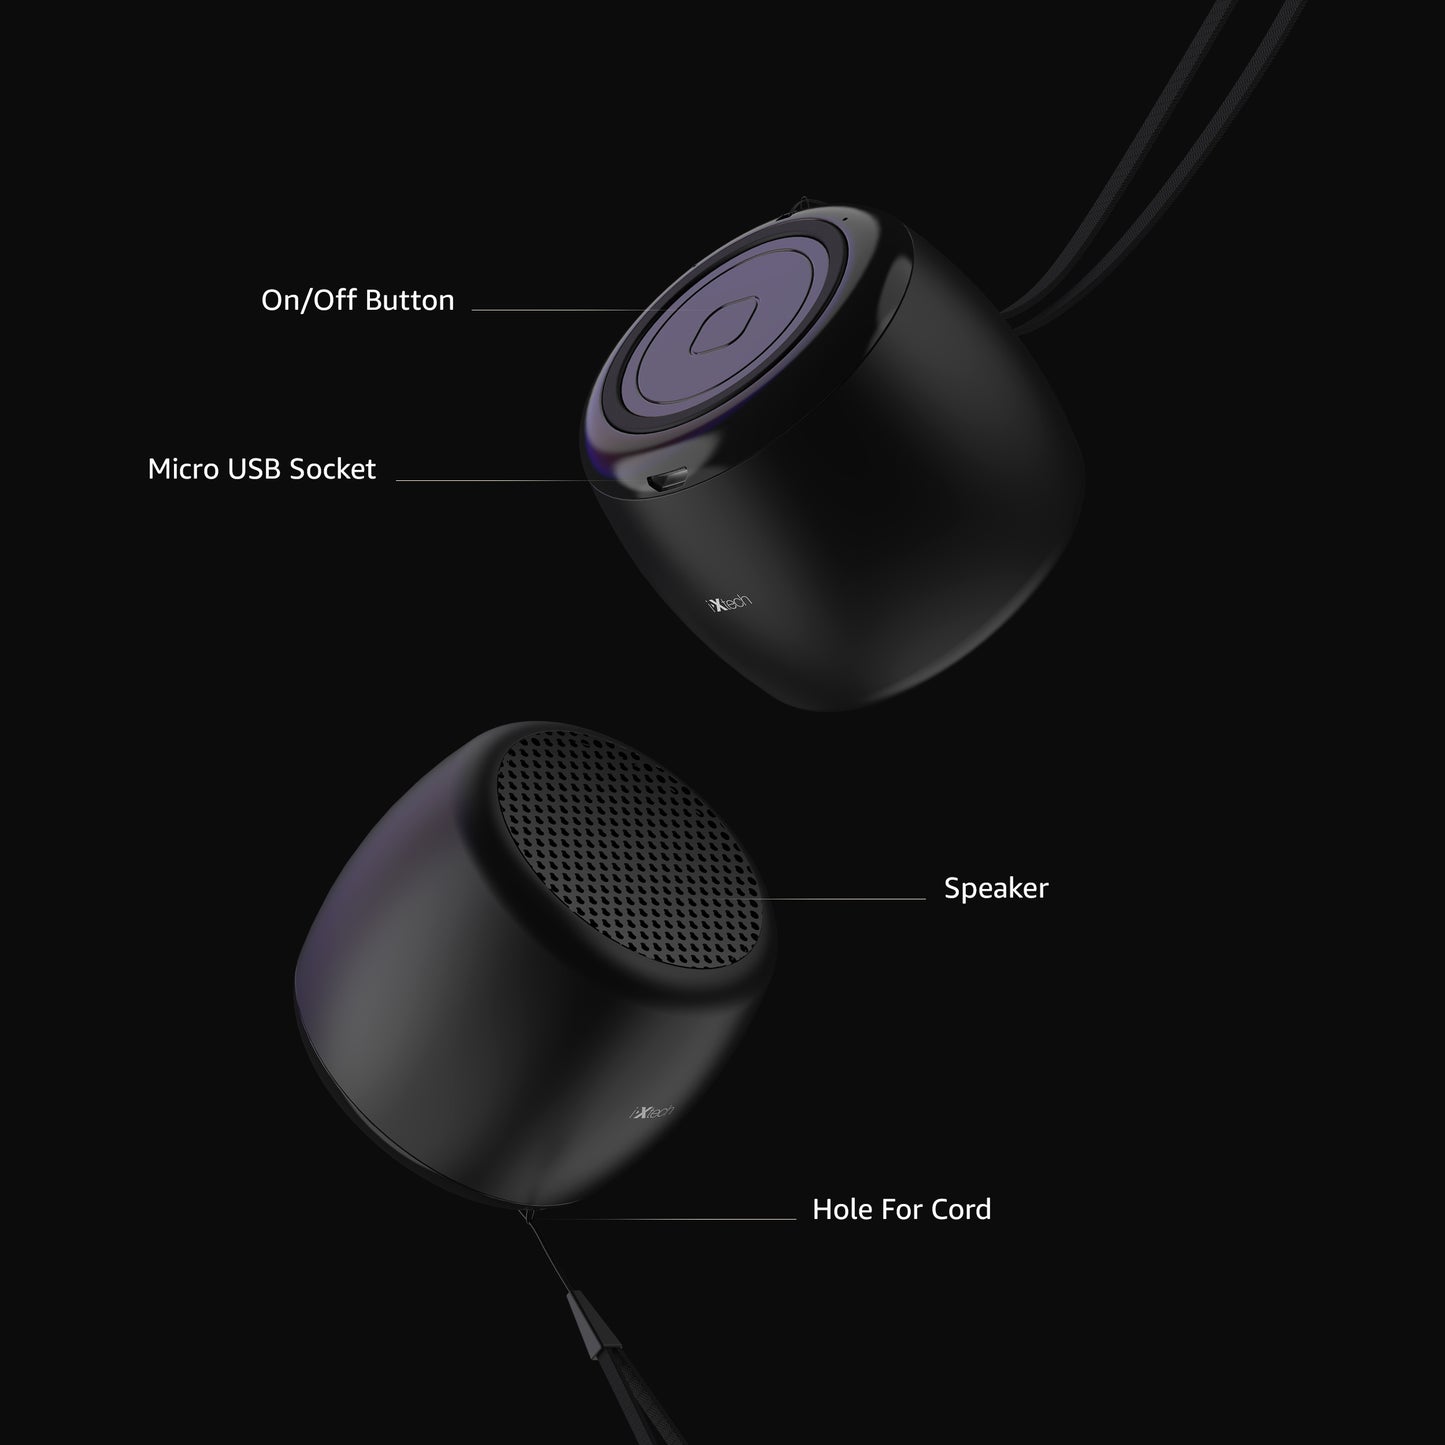 IXTECH Portable Small Bluetooth Speaker